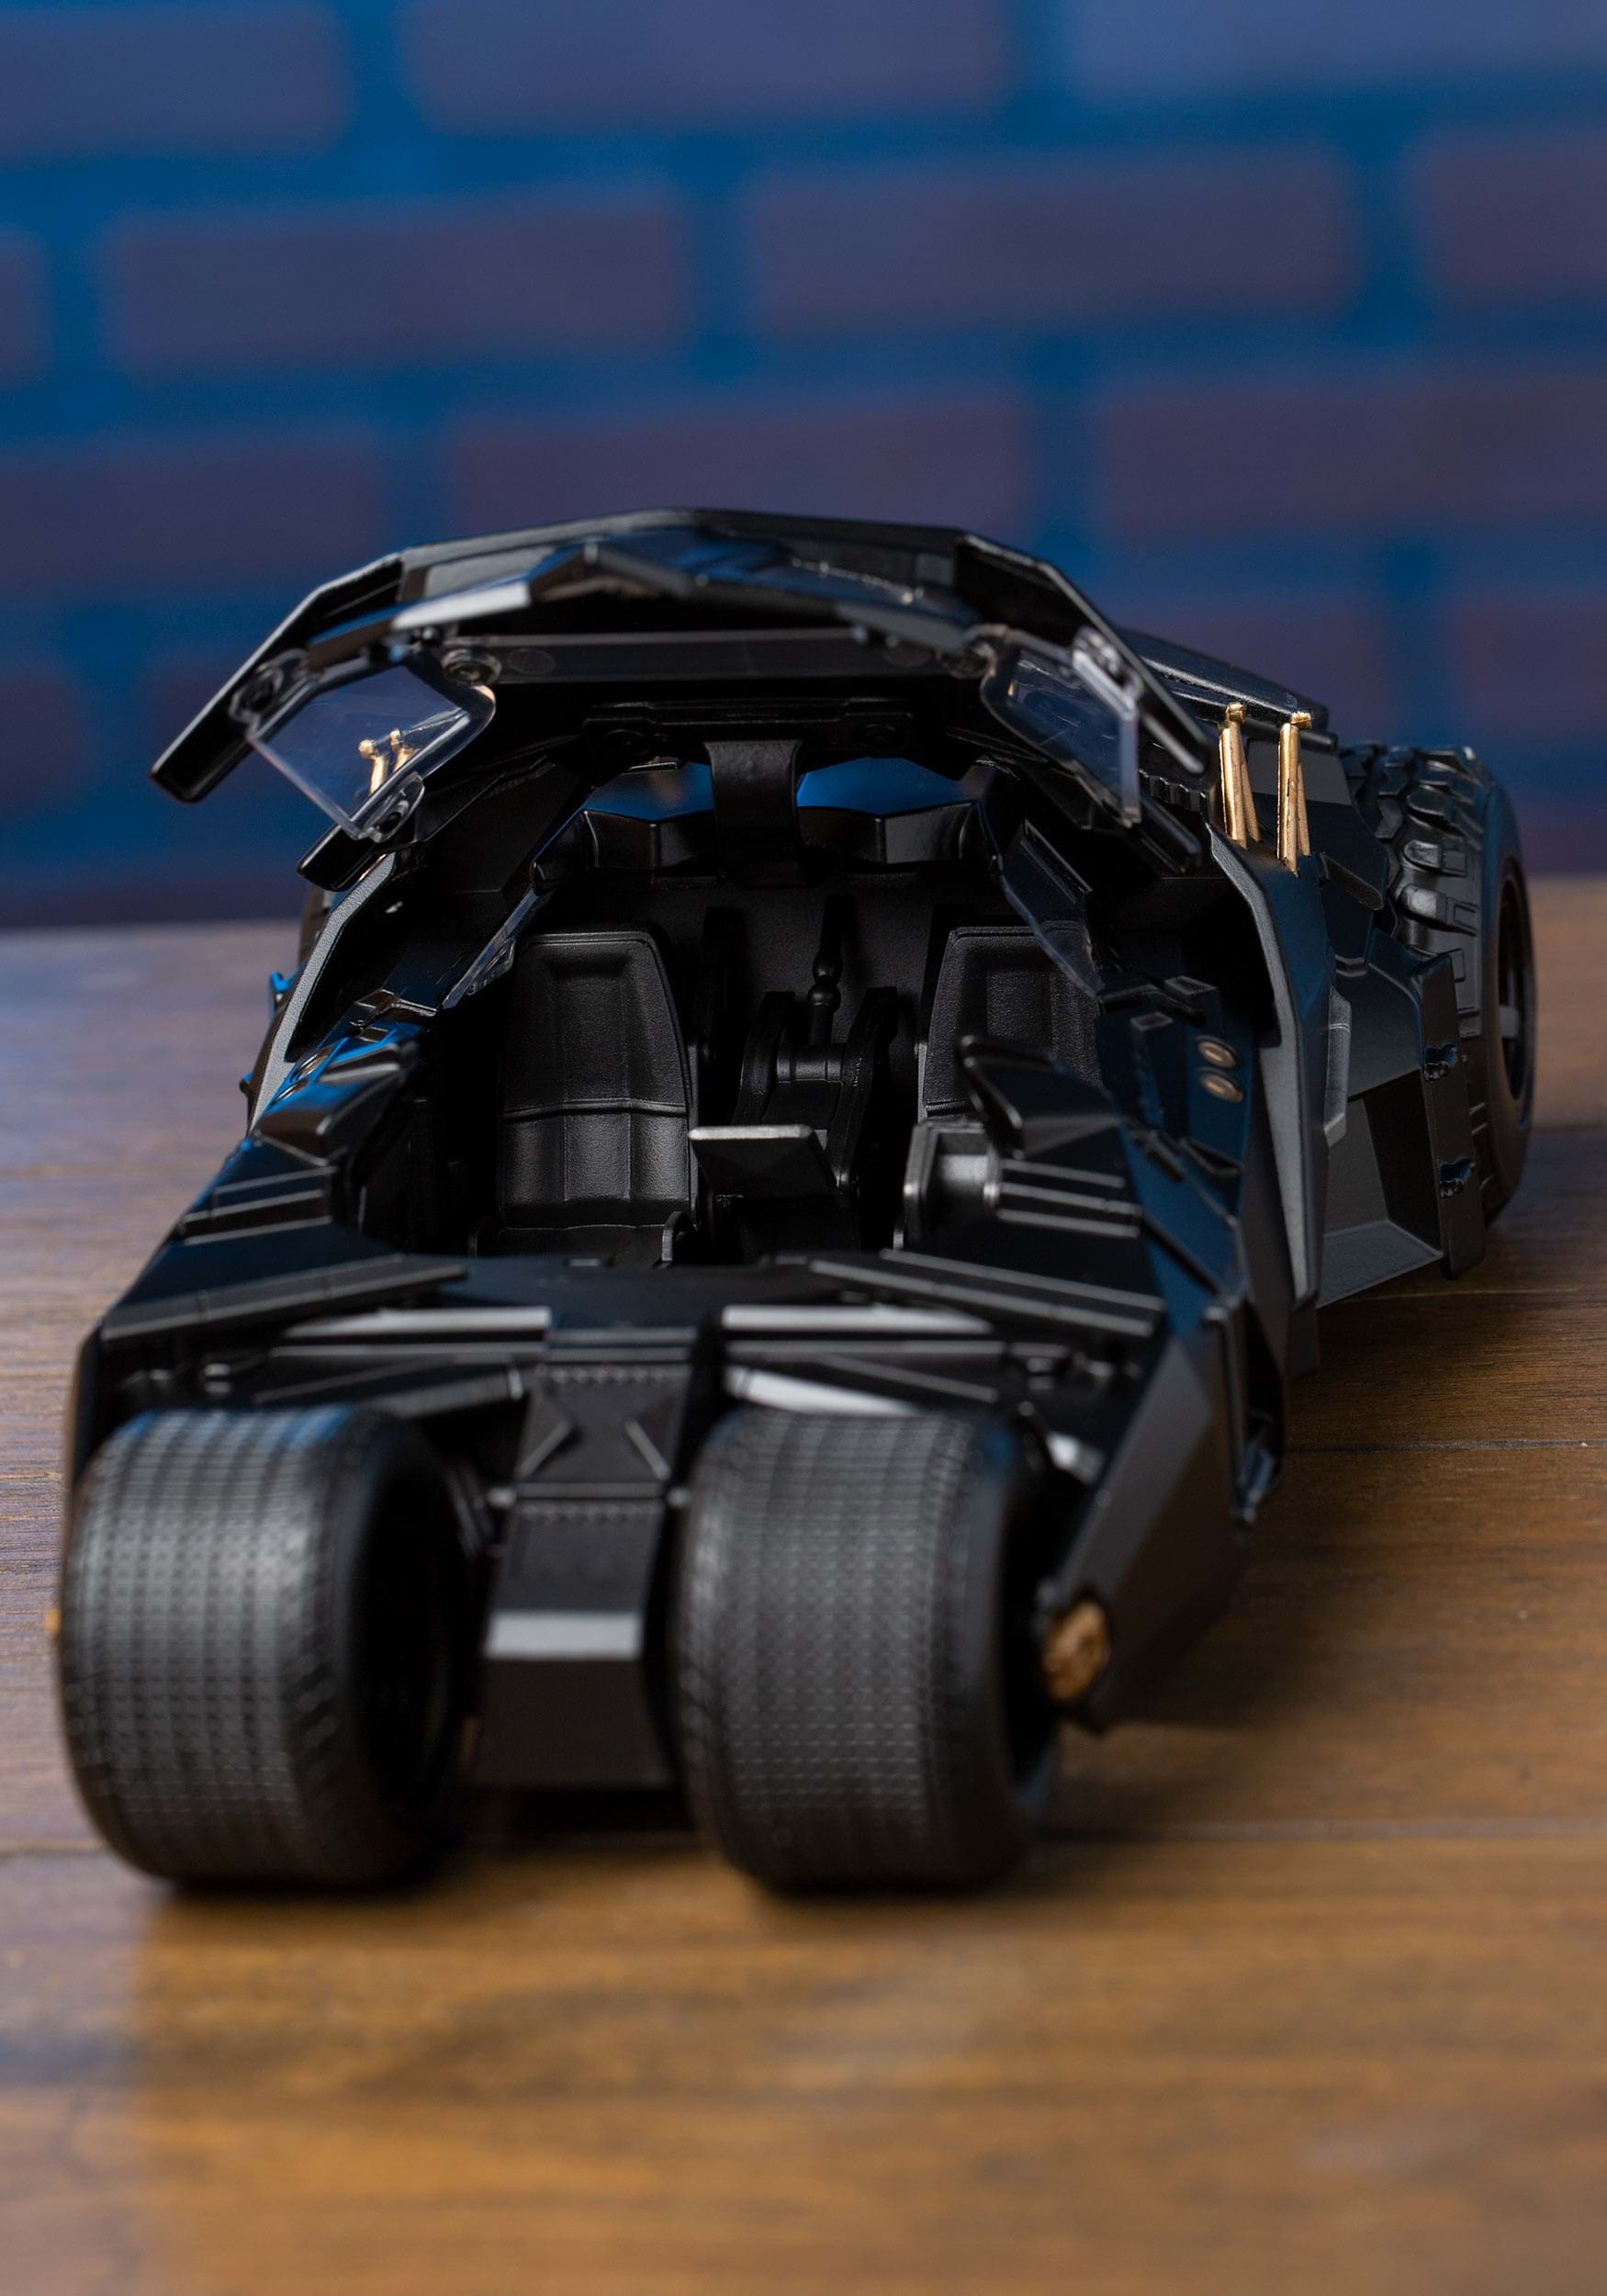 Batman Dark Knight Tumbler 1:24 Die Cast Car W/ Figure